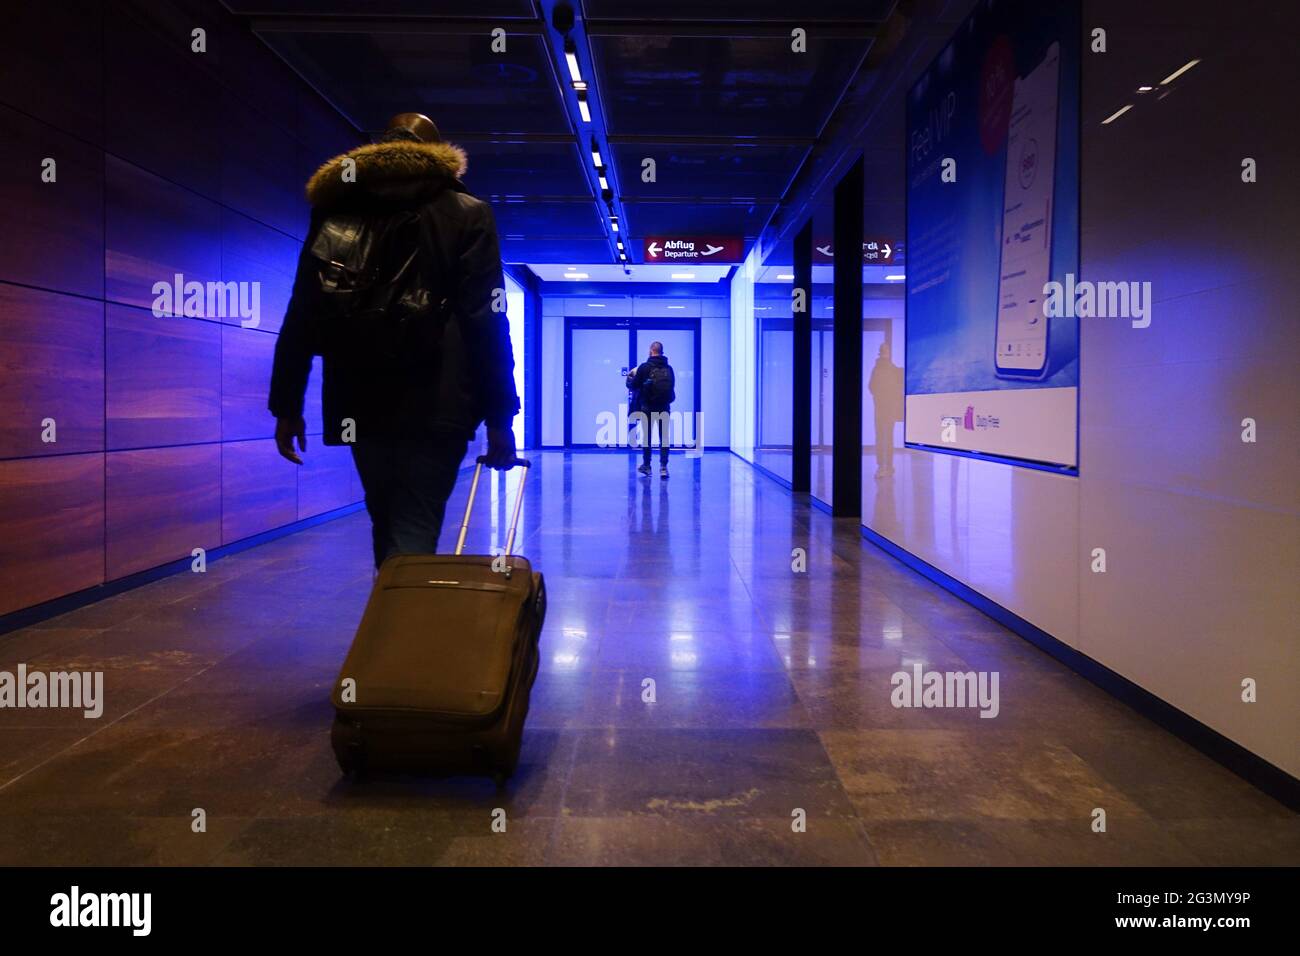 '17.02.2021, Schoenefeld, Brandenburg, Germany - Passengers at Berlin-Brandenburg International Airport BER on their way to board. 00S210217D993CAROEX Stock Photo